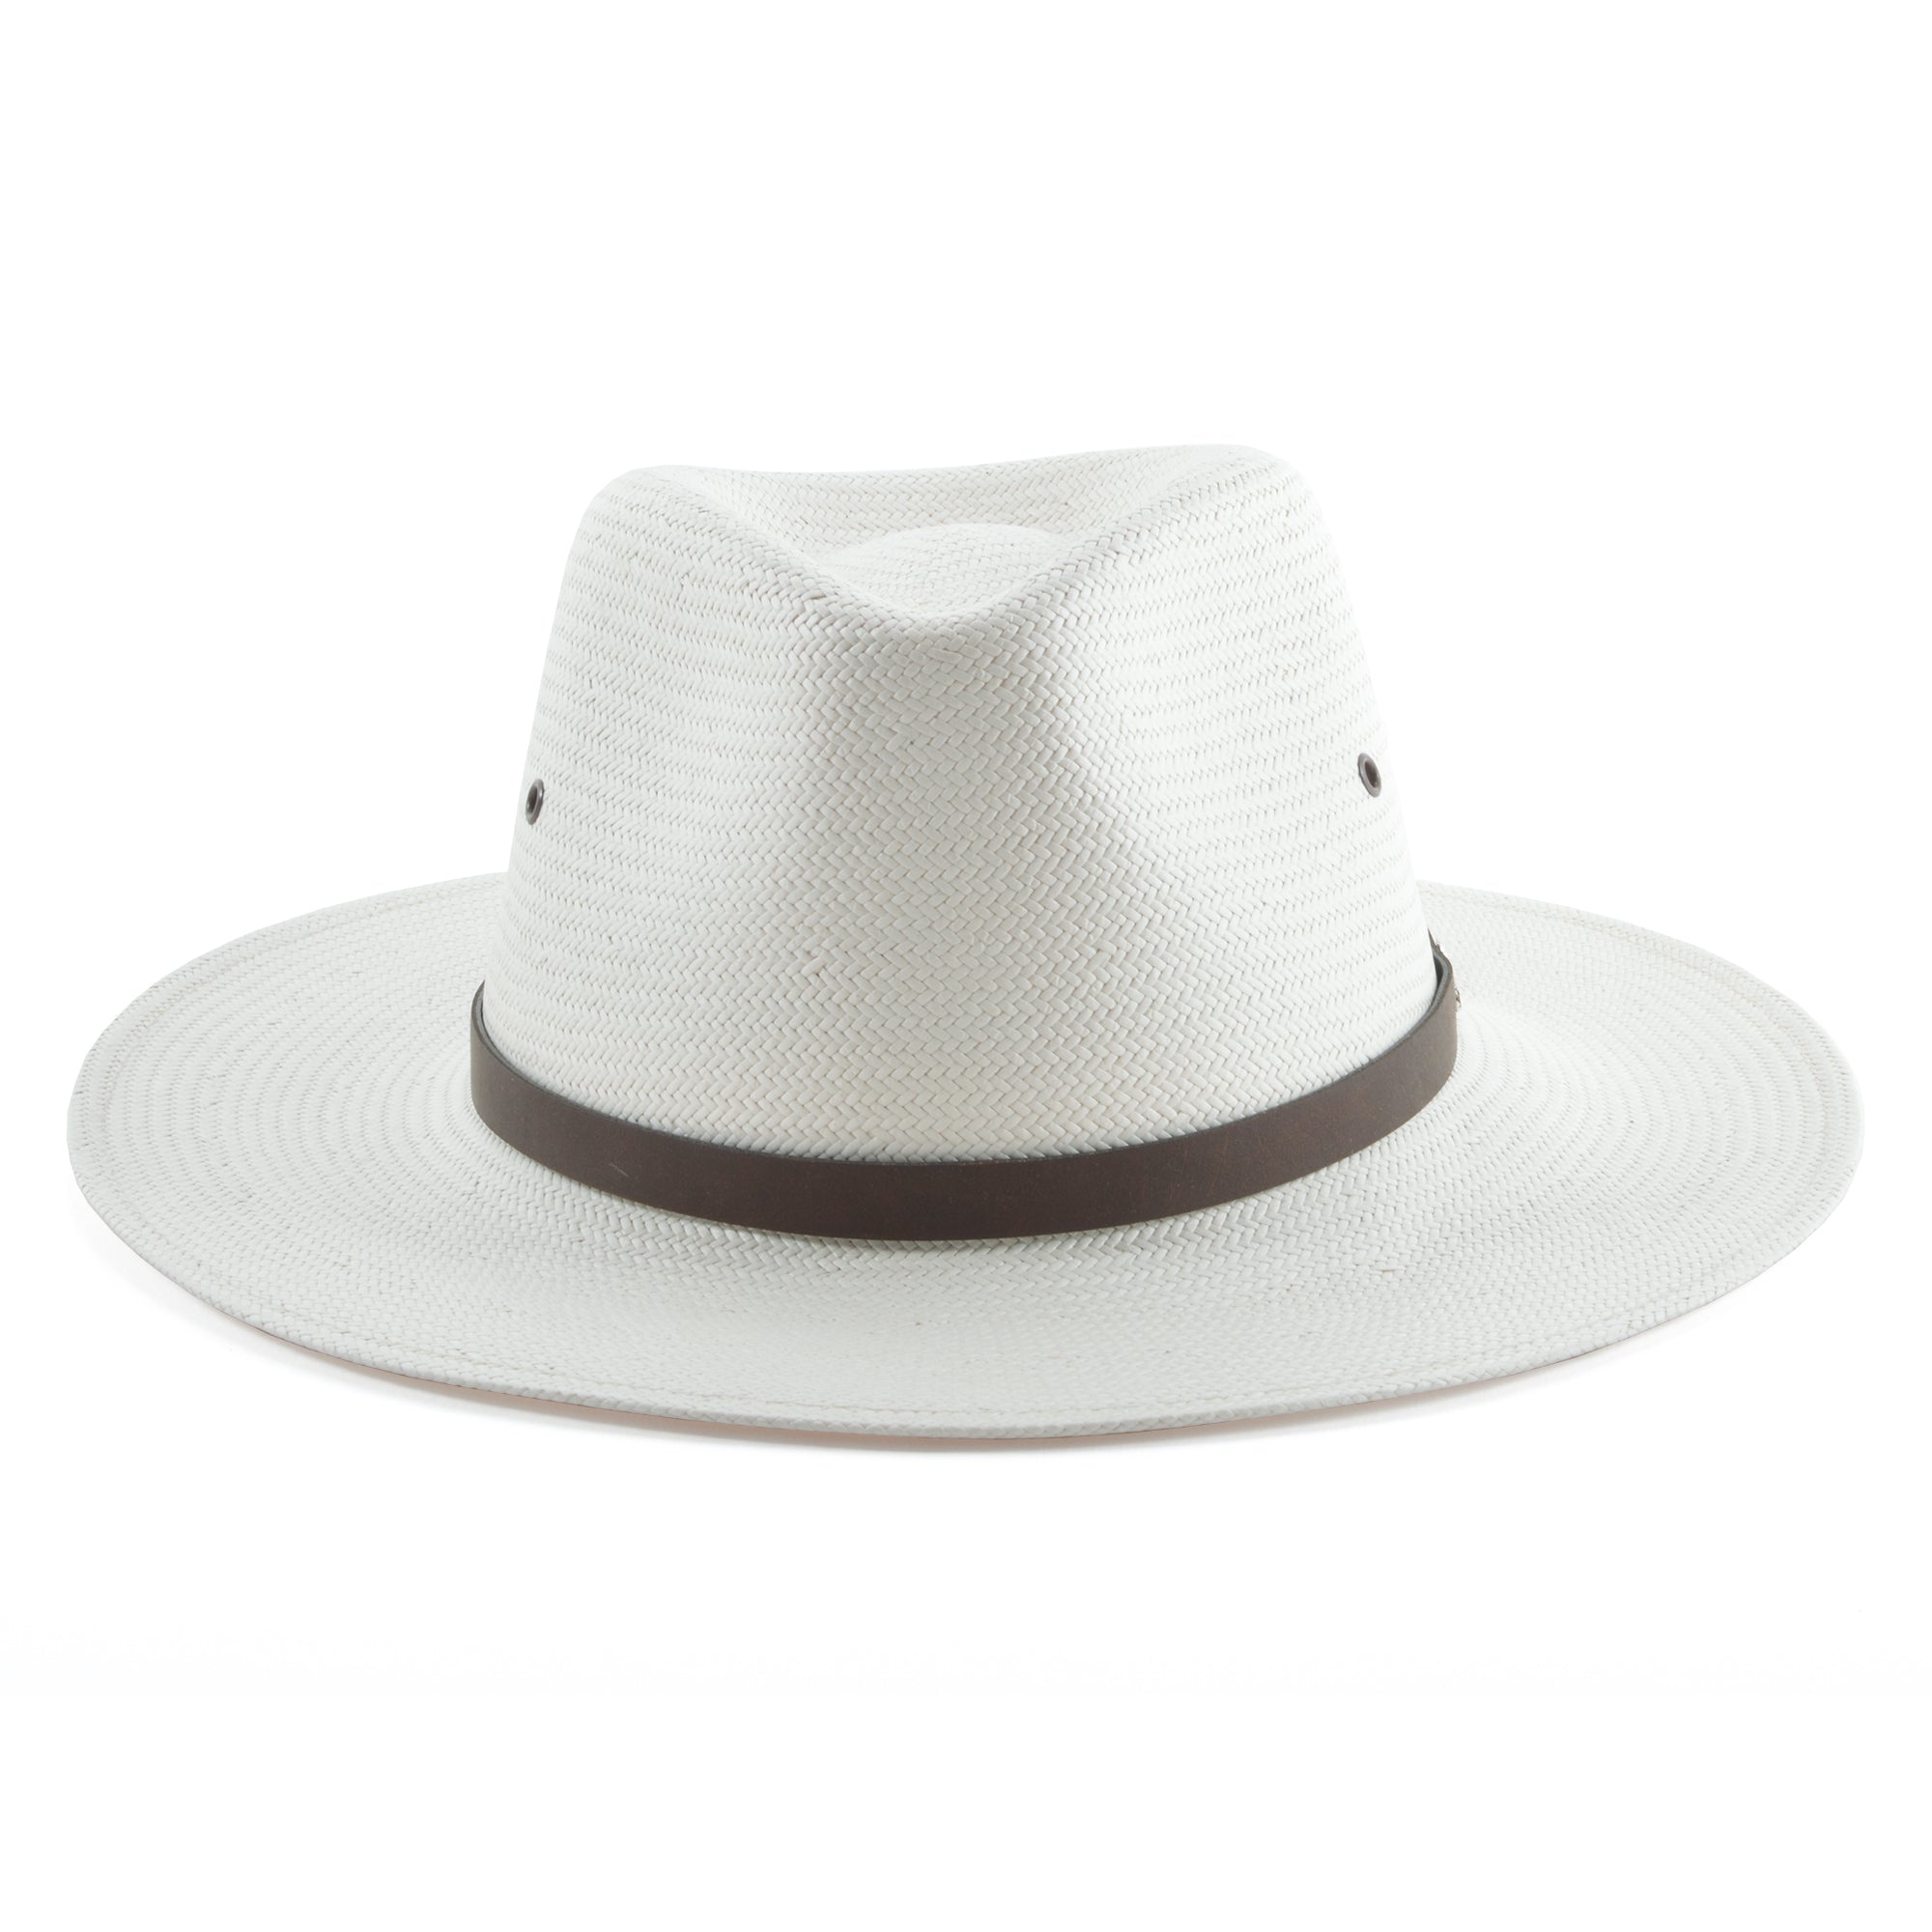 Stetson Ludington Shantung Straw Safari Hat